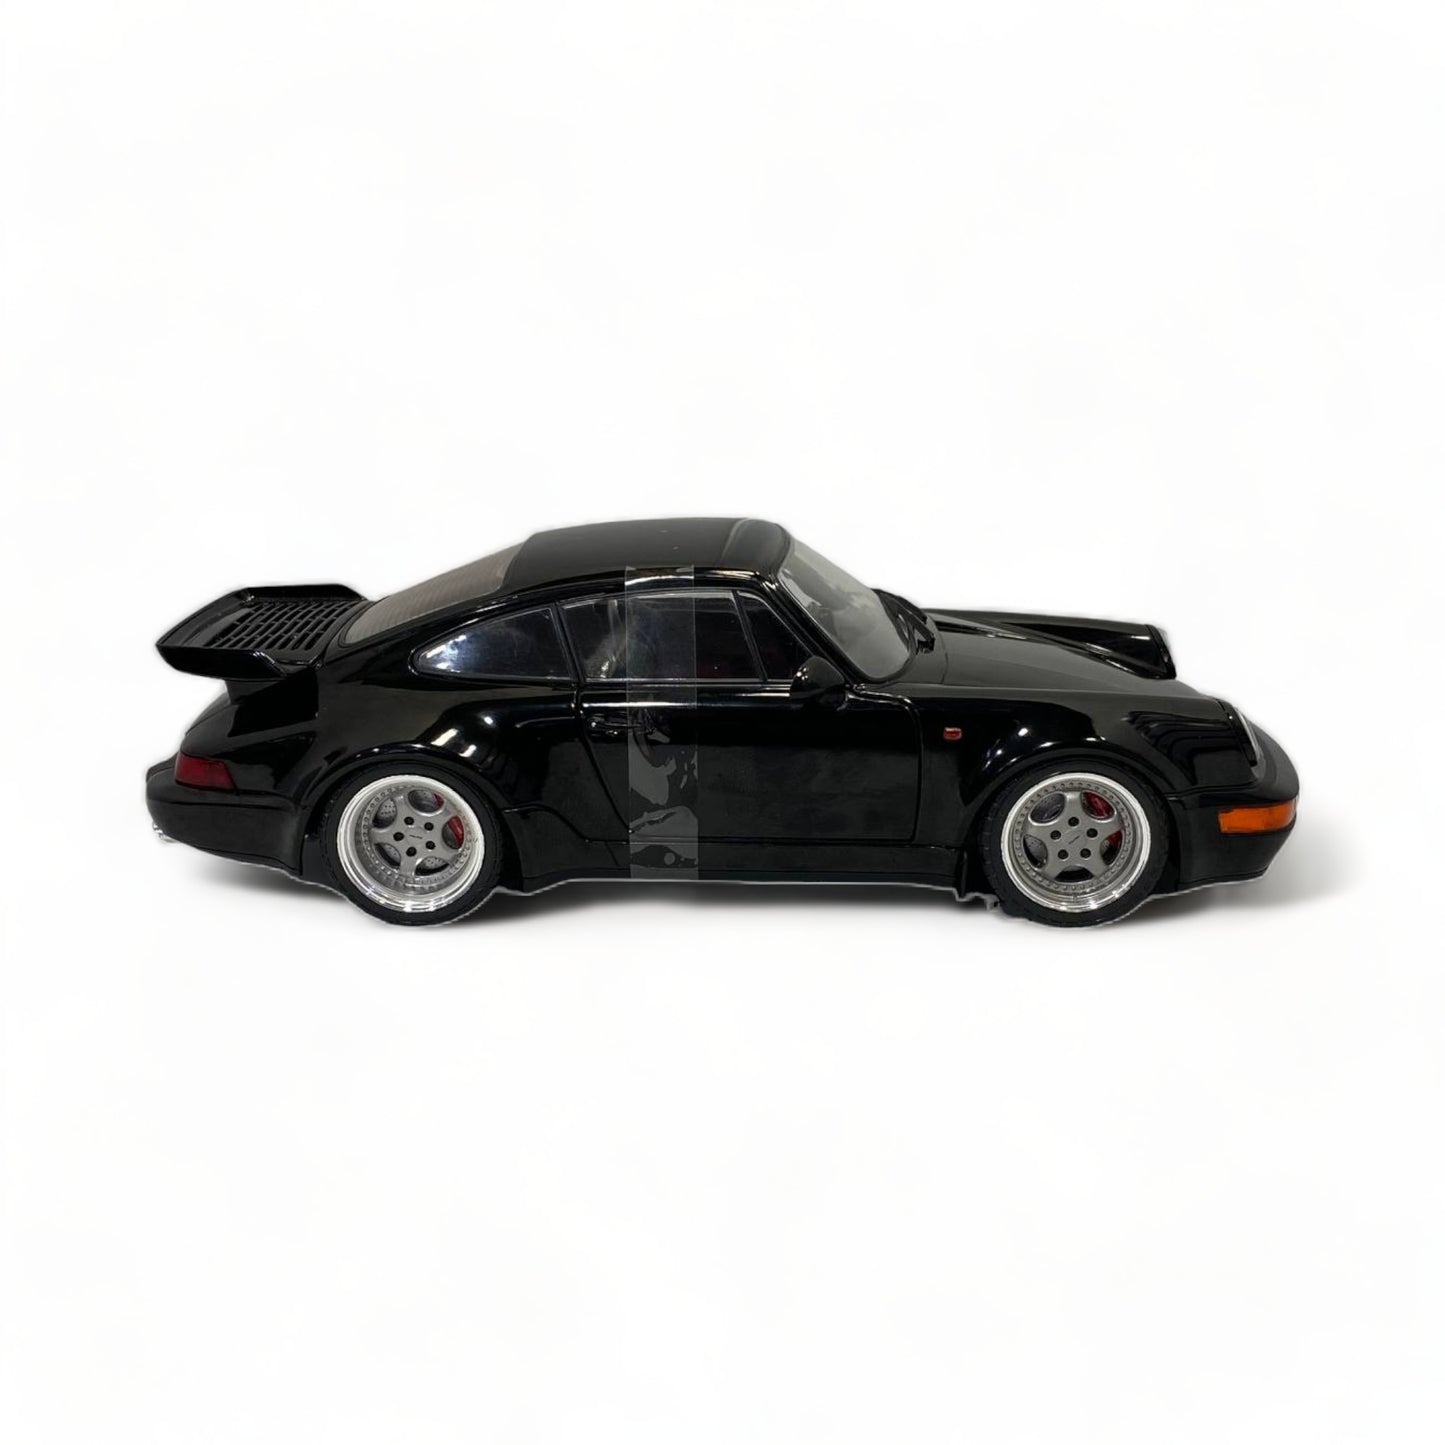 1/18 Diecast Solido Porsche 964 Turbo BLACK 1990 Scale Model Car|Sold in Dturman.com Dubai UAE.